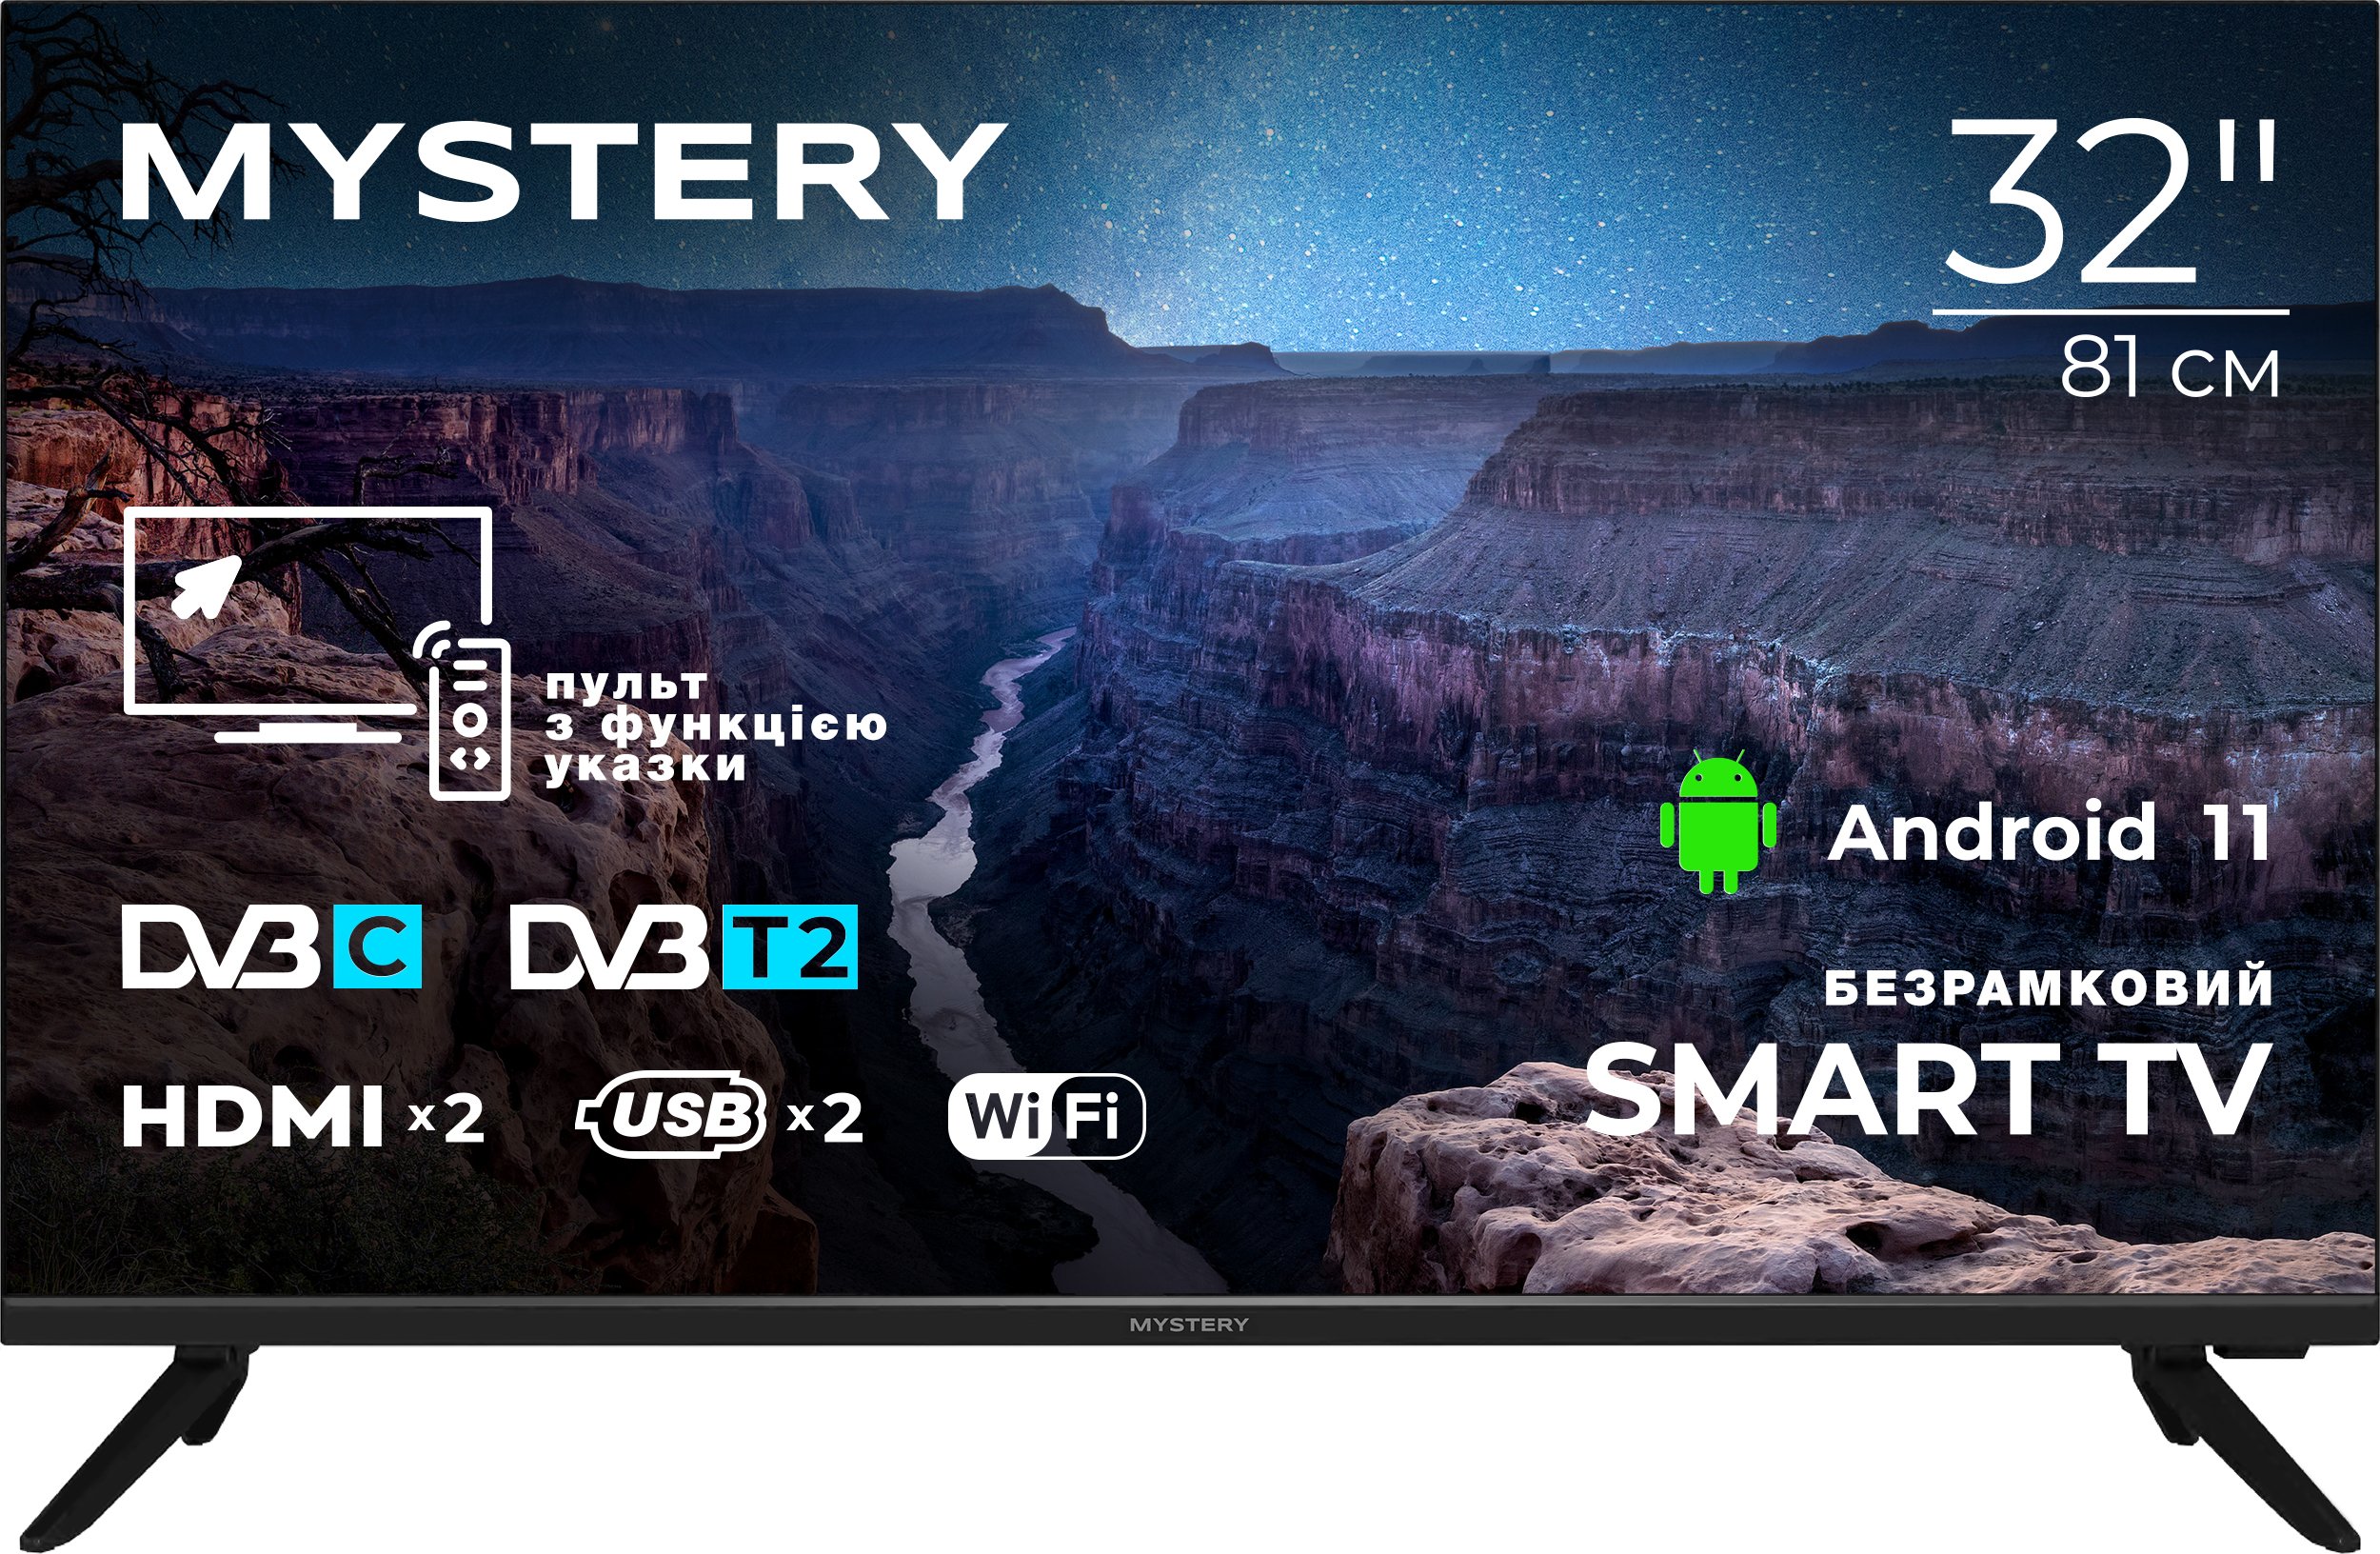 Mystery MTV-3230HST2 Smart TV